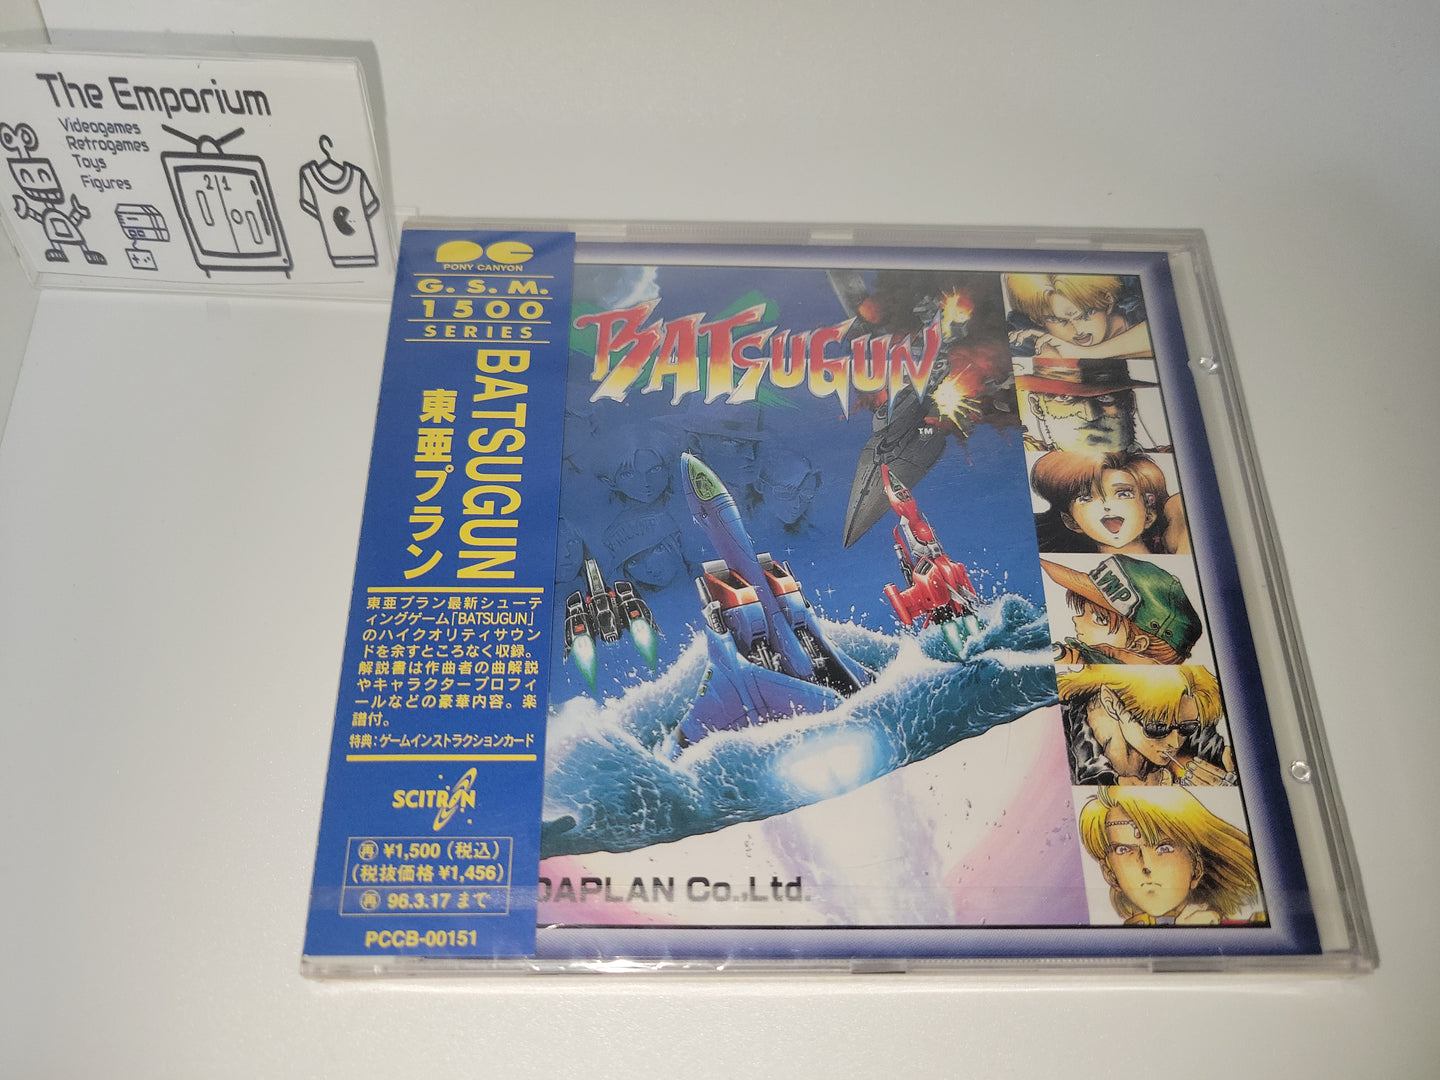 Batsugun - Music cd soundtrack